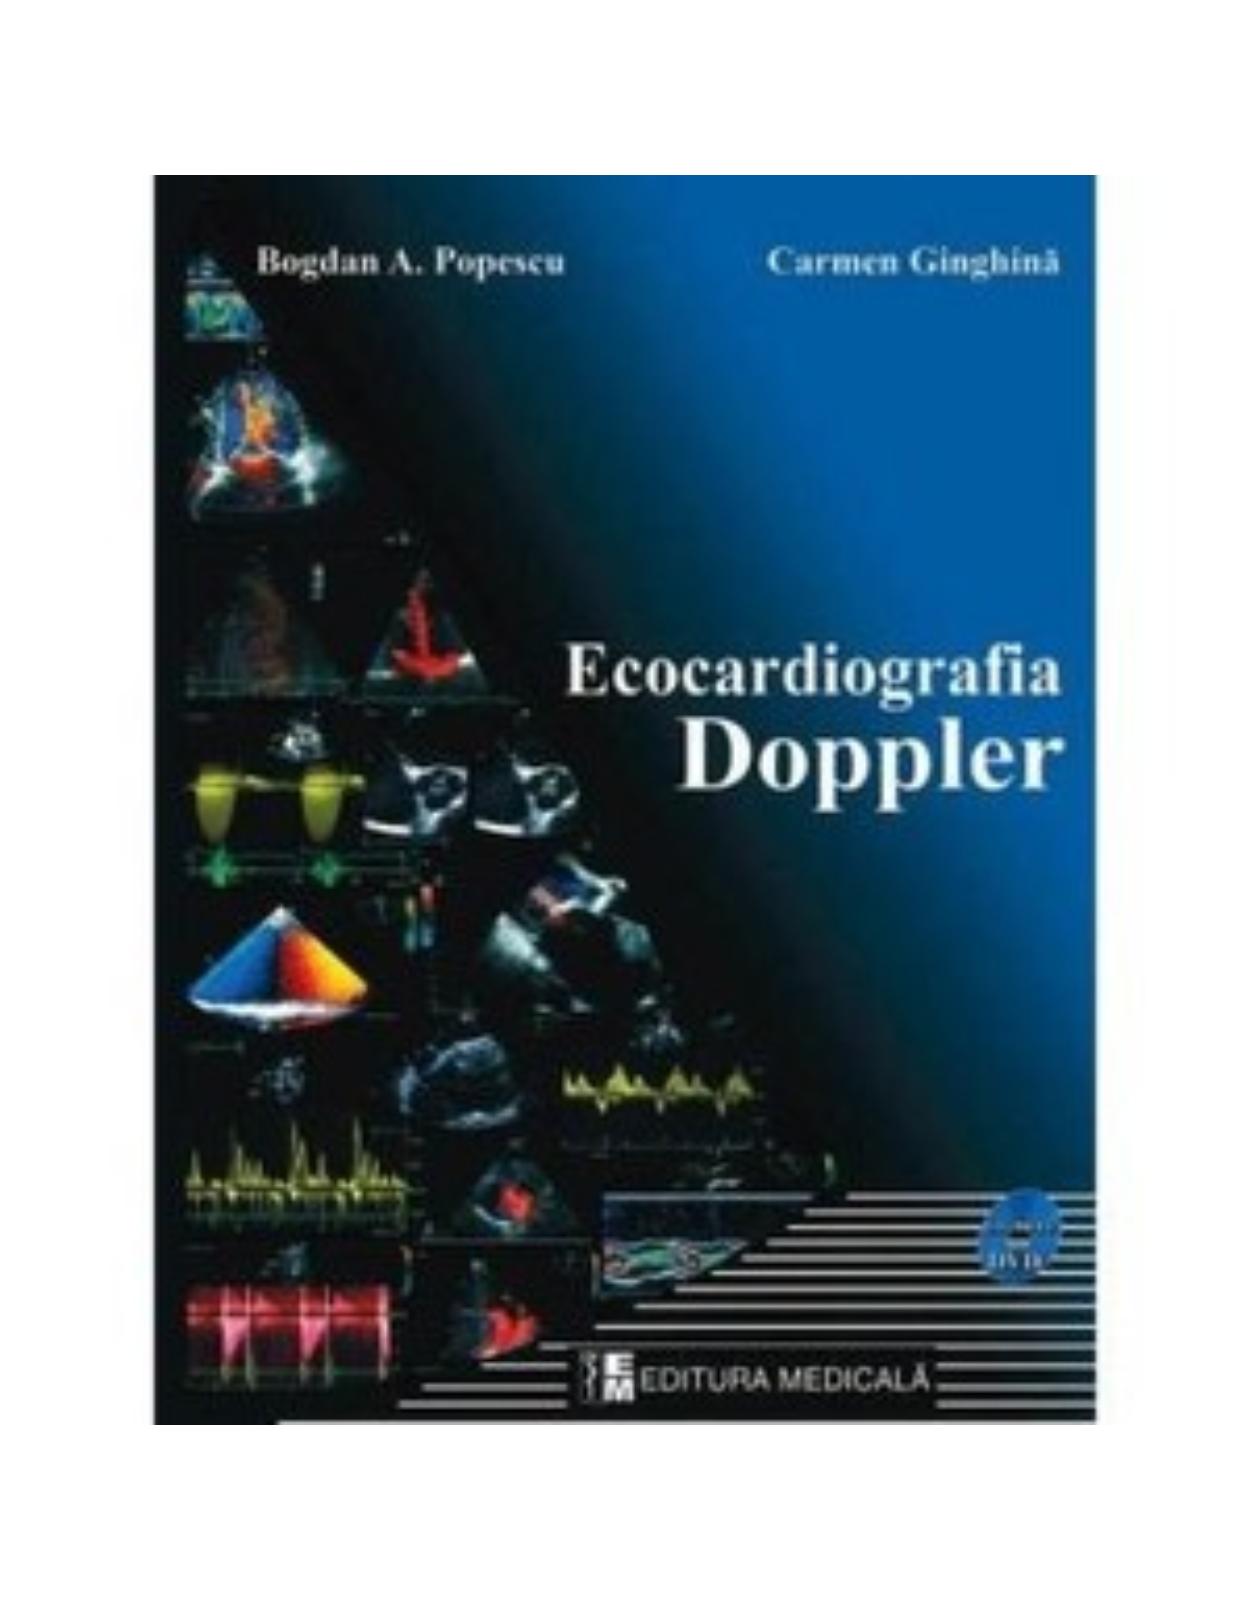 Ecocardiografia Doppler